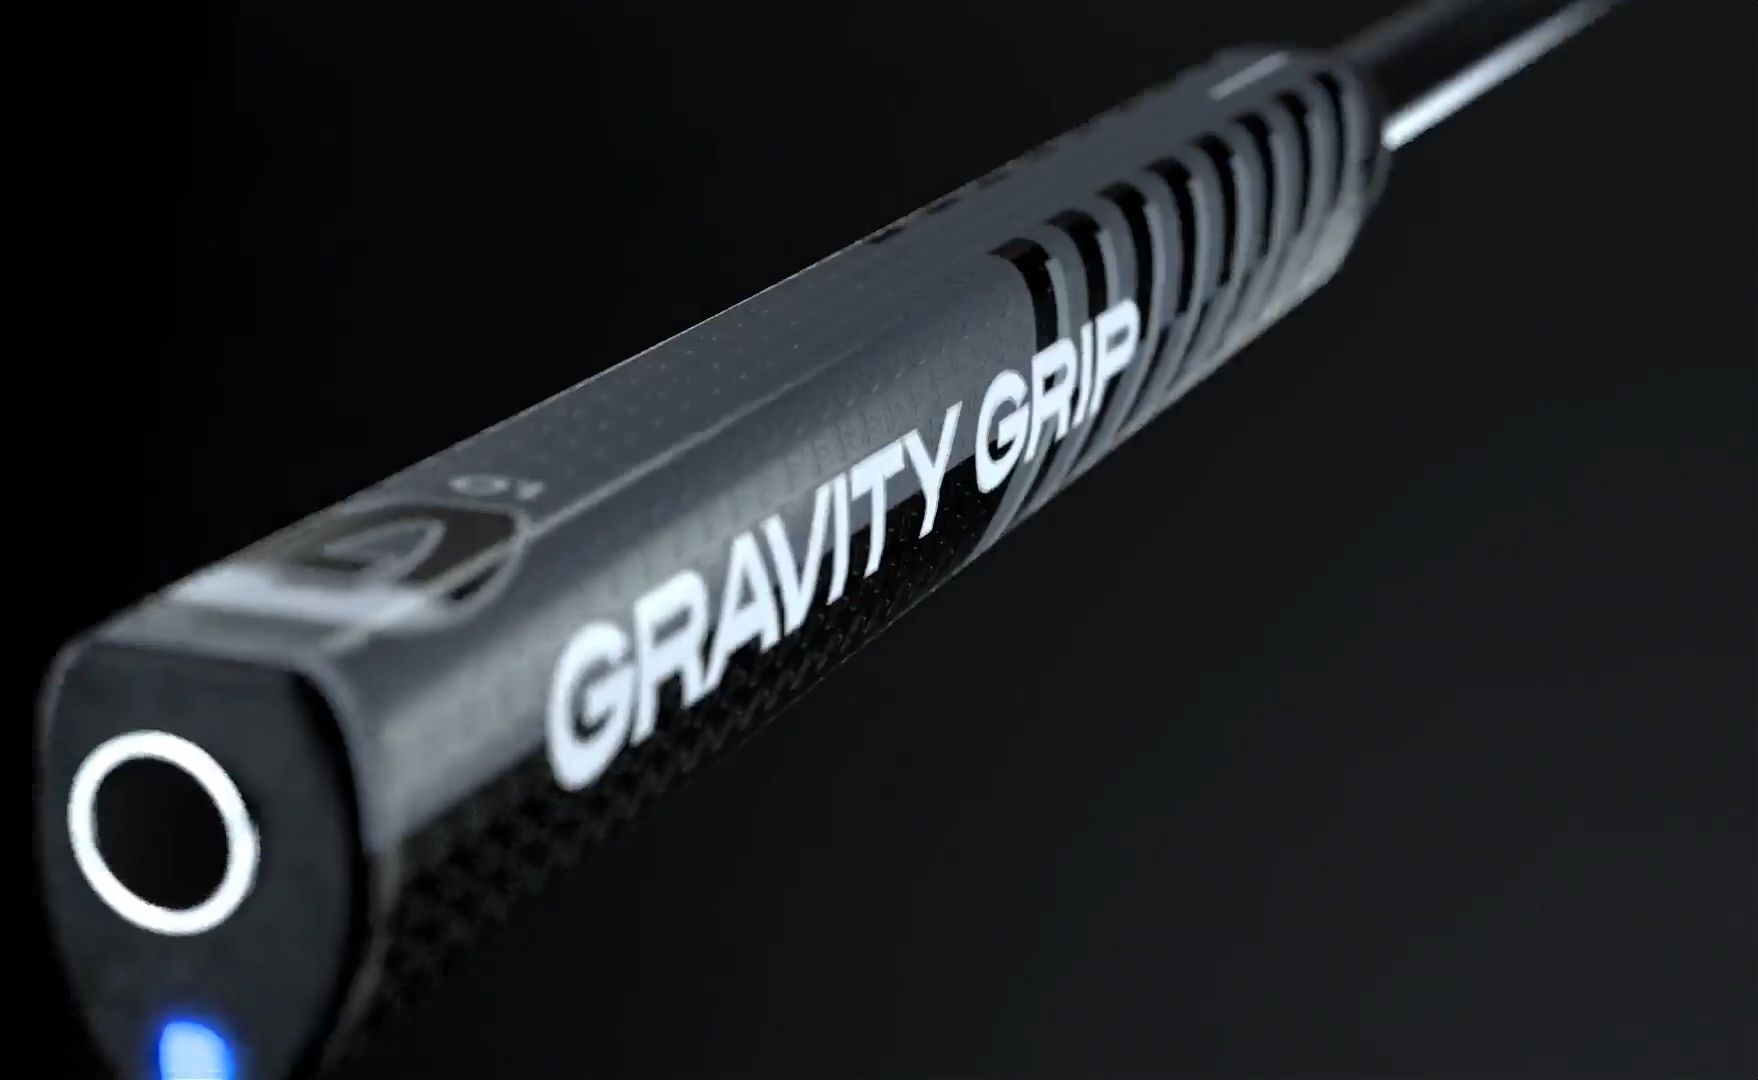 Load video: Gravity Grip Information Video